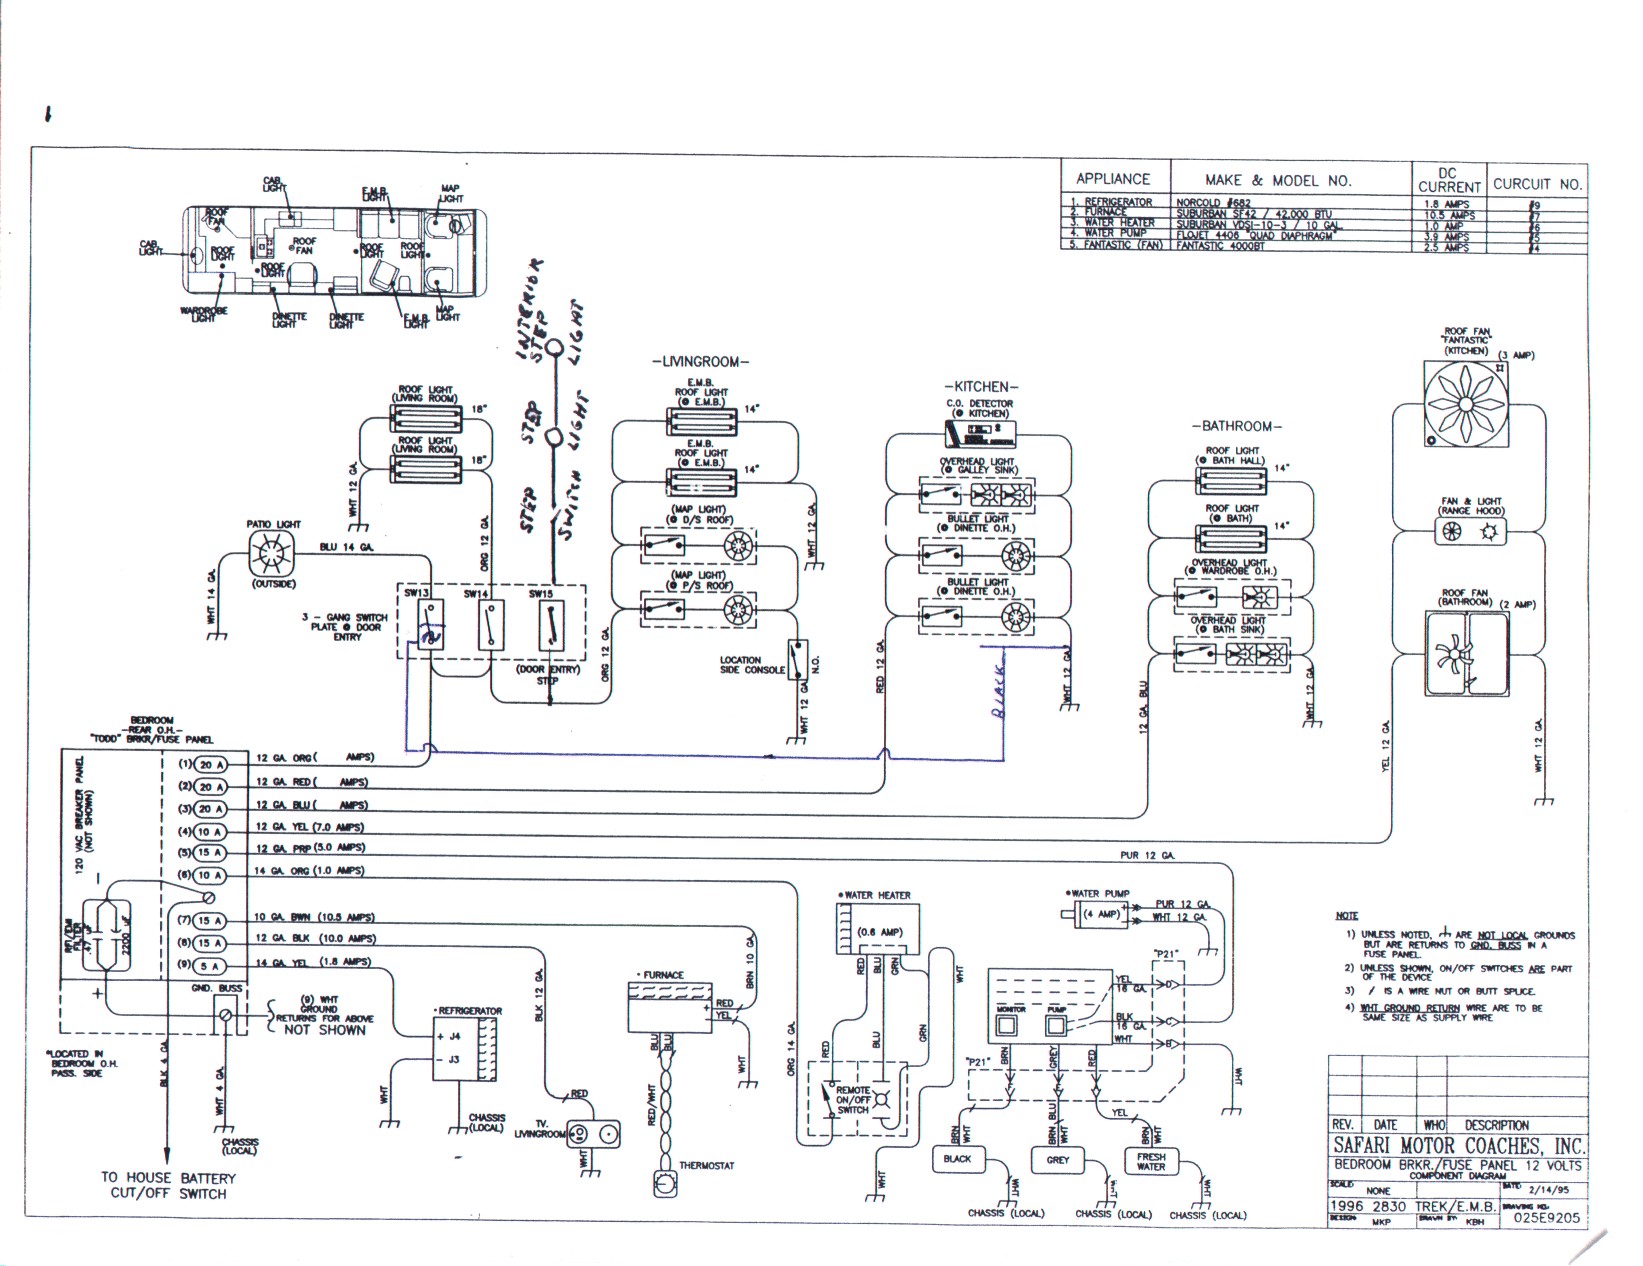 bedroom wiring diagram diagrams schematics inside volovets info 66 mustang wiring diagram gallery of bedroom wiring